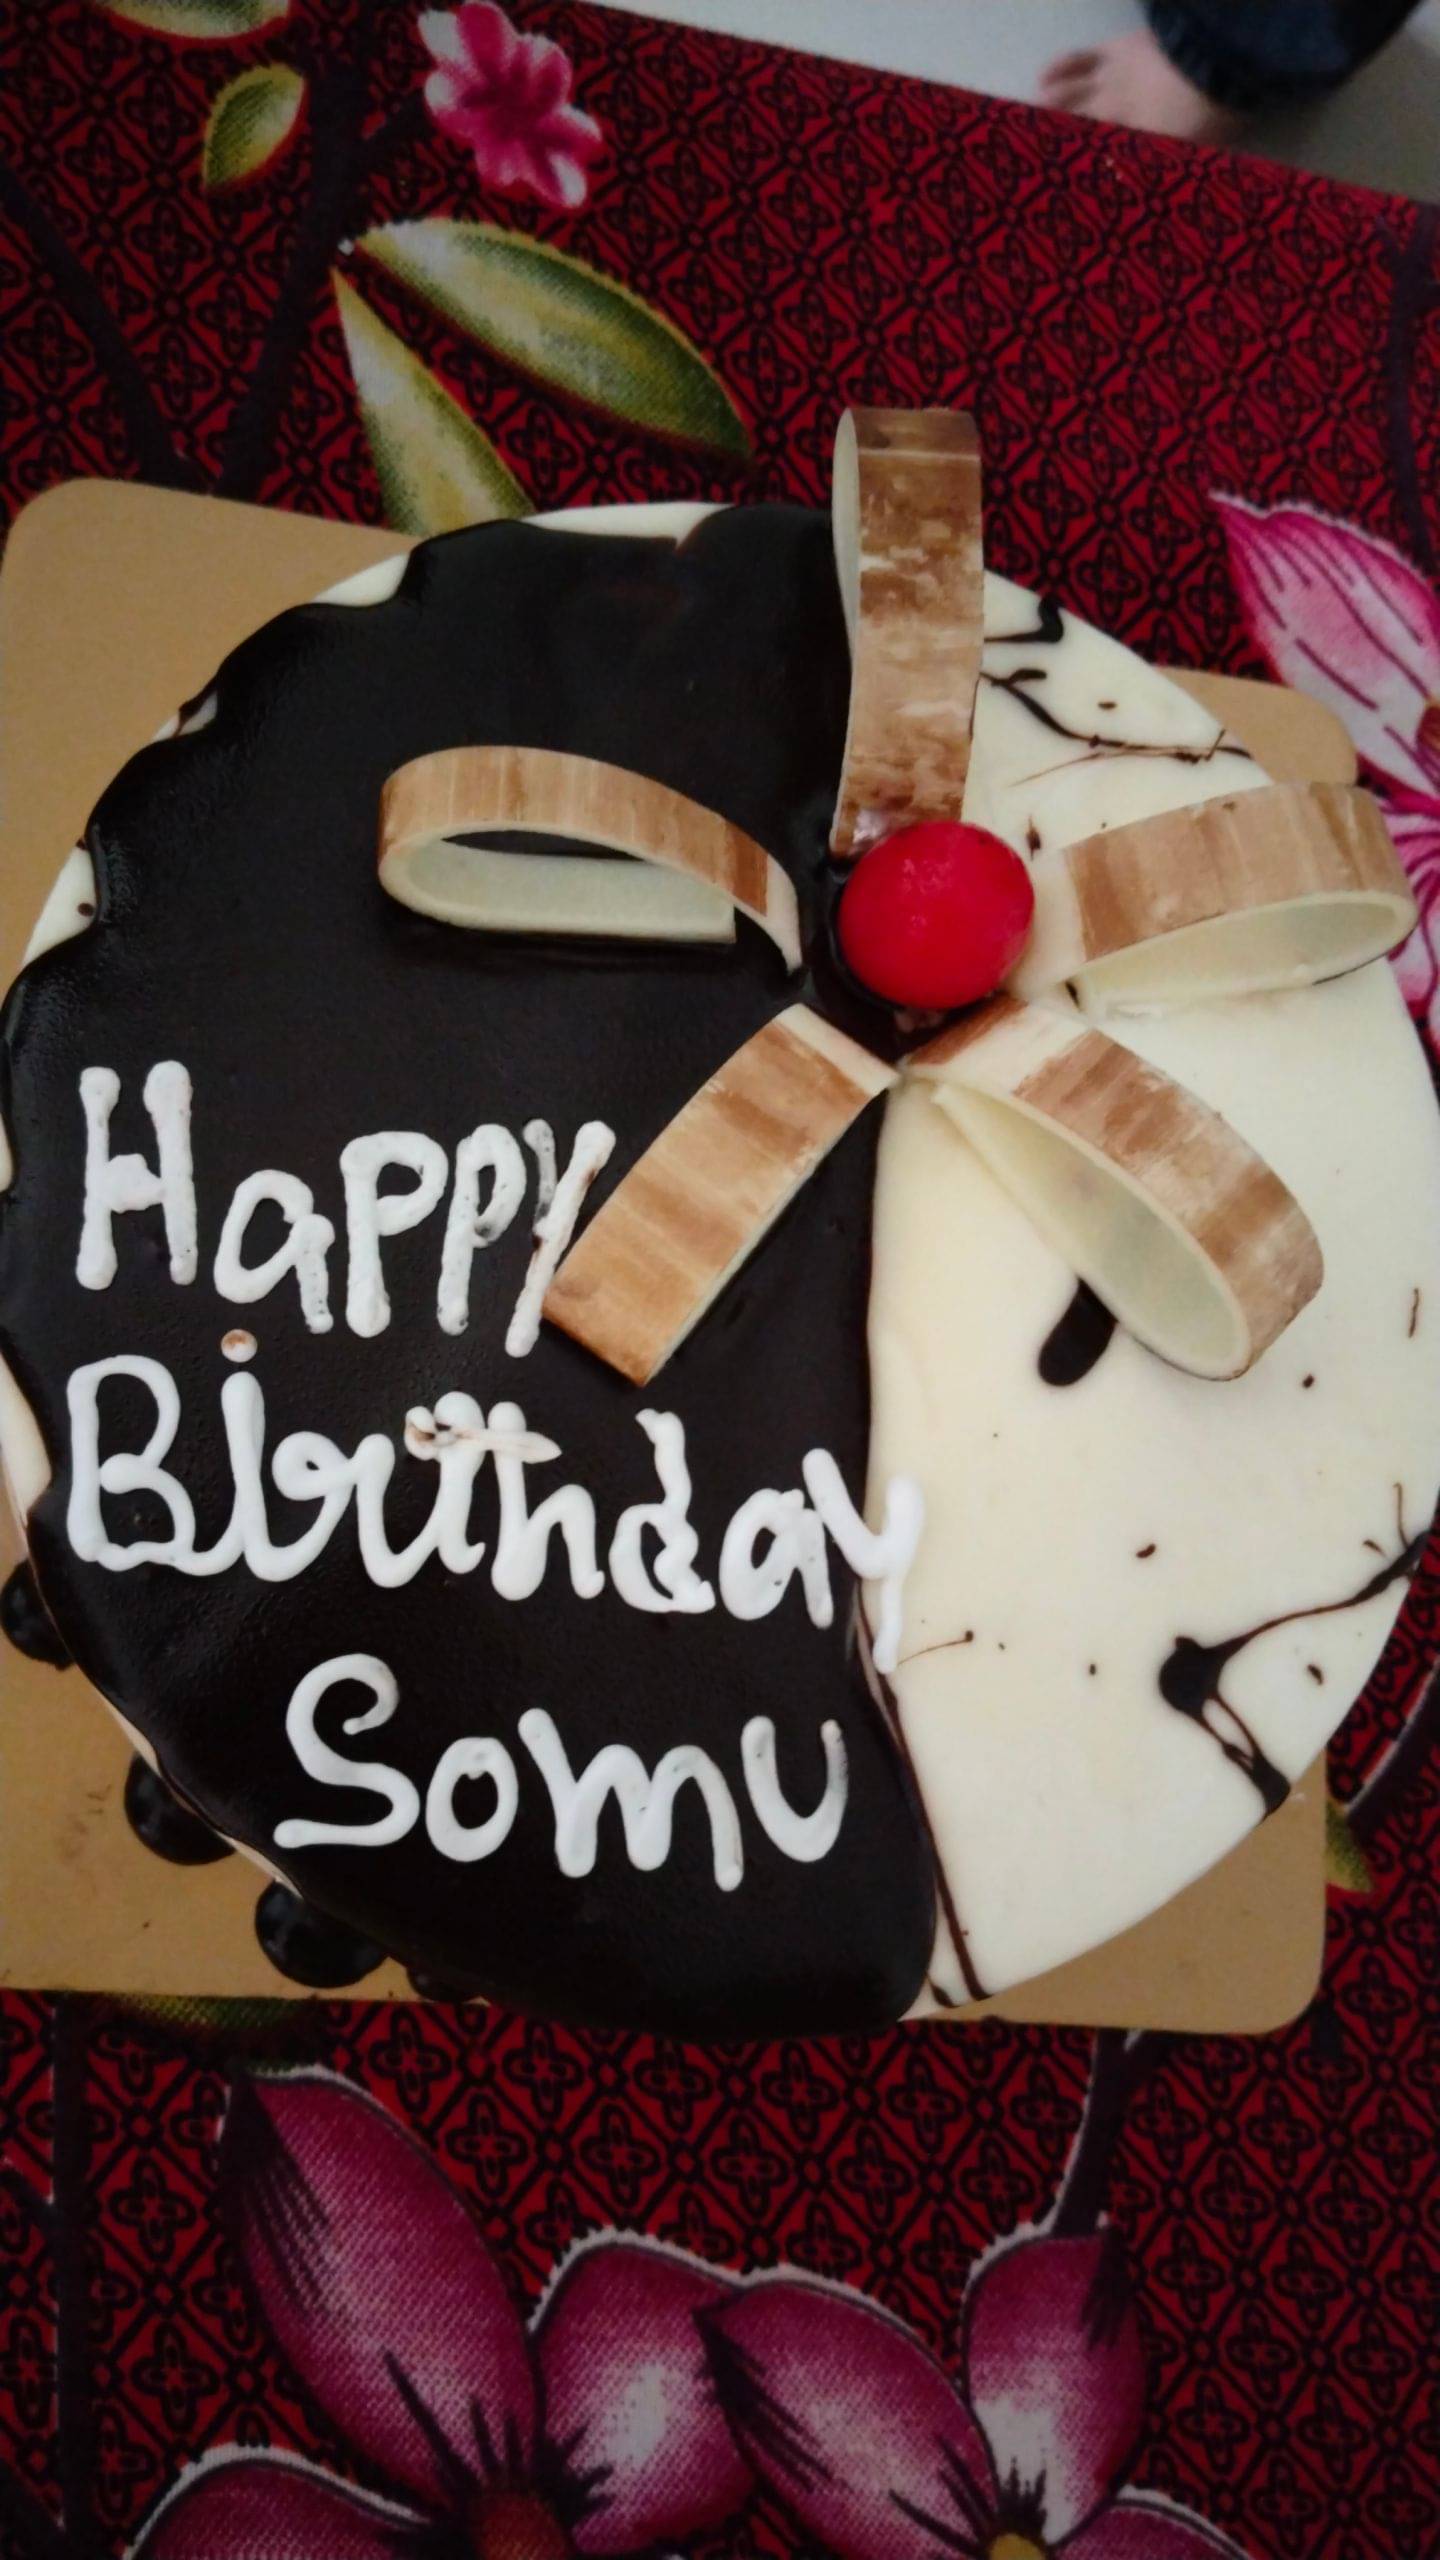 Sonu Bakery in Noida Sector 44,Delhi - Best Cake Manufacturers in Delhi -  Justdial